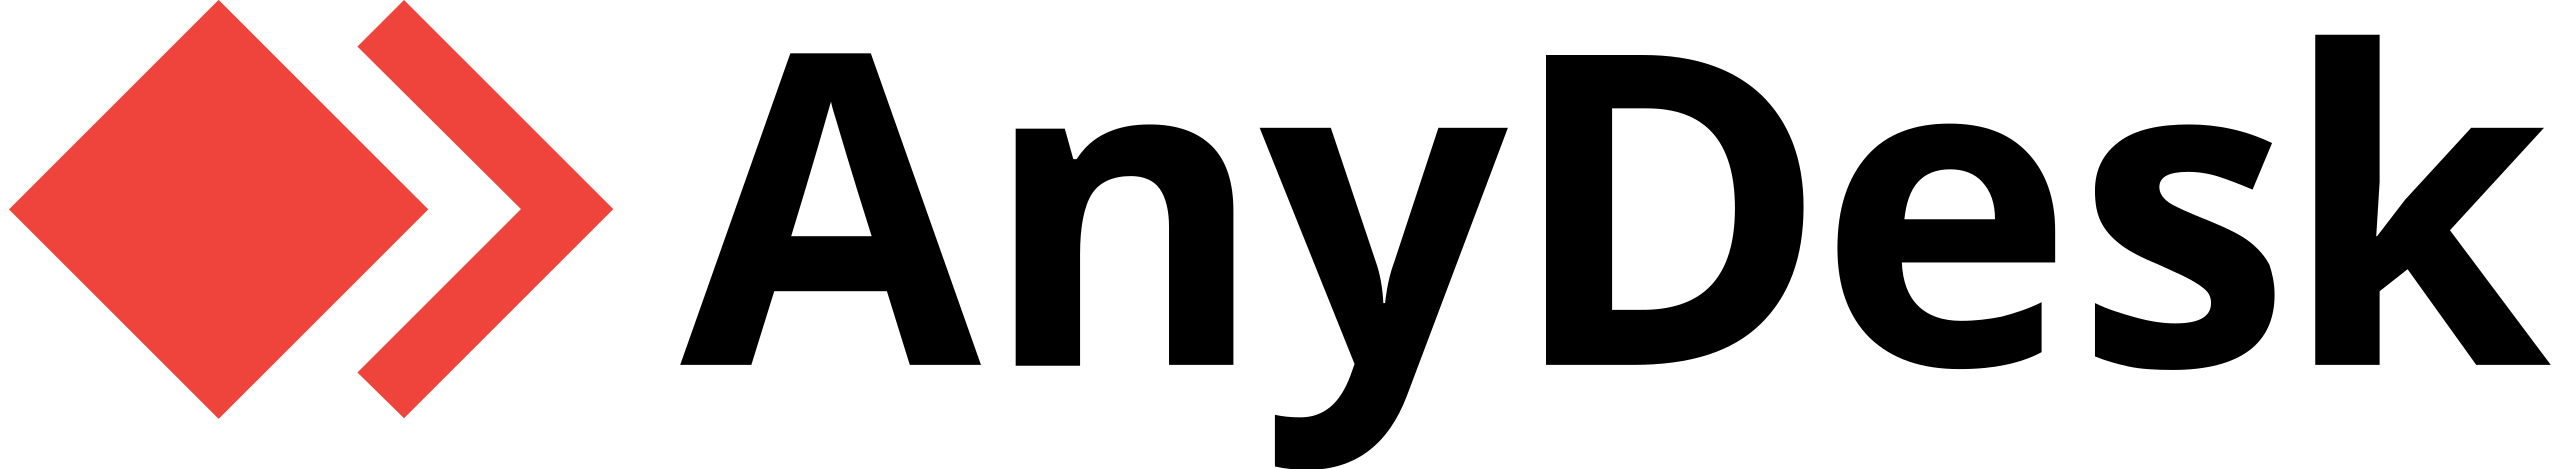 AnyDesk-logo